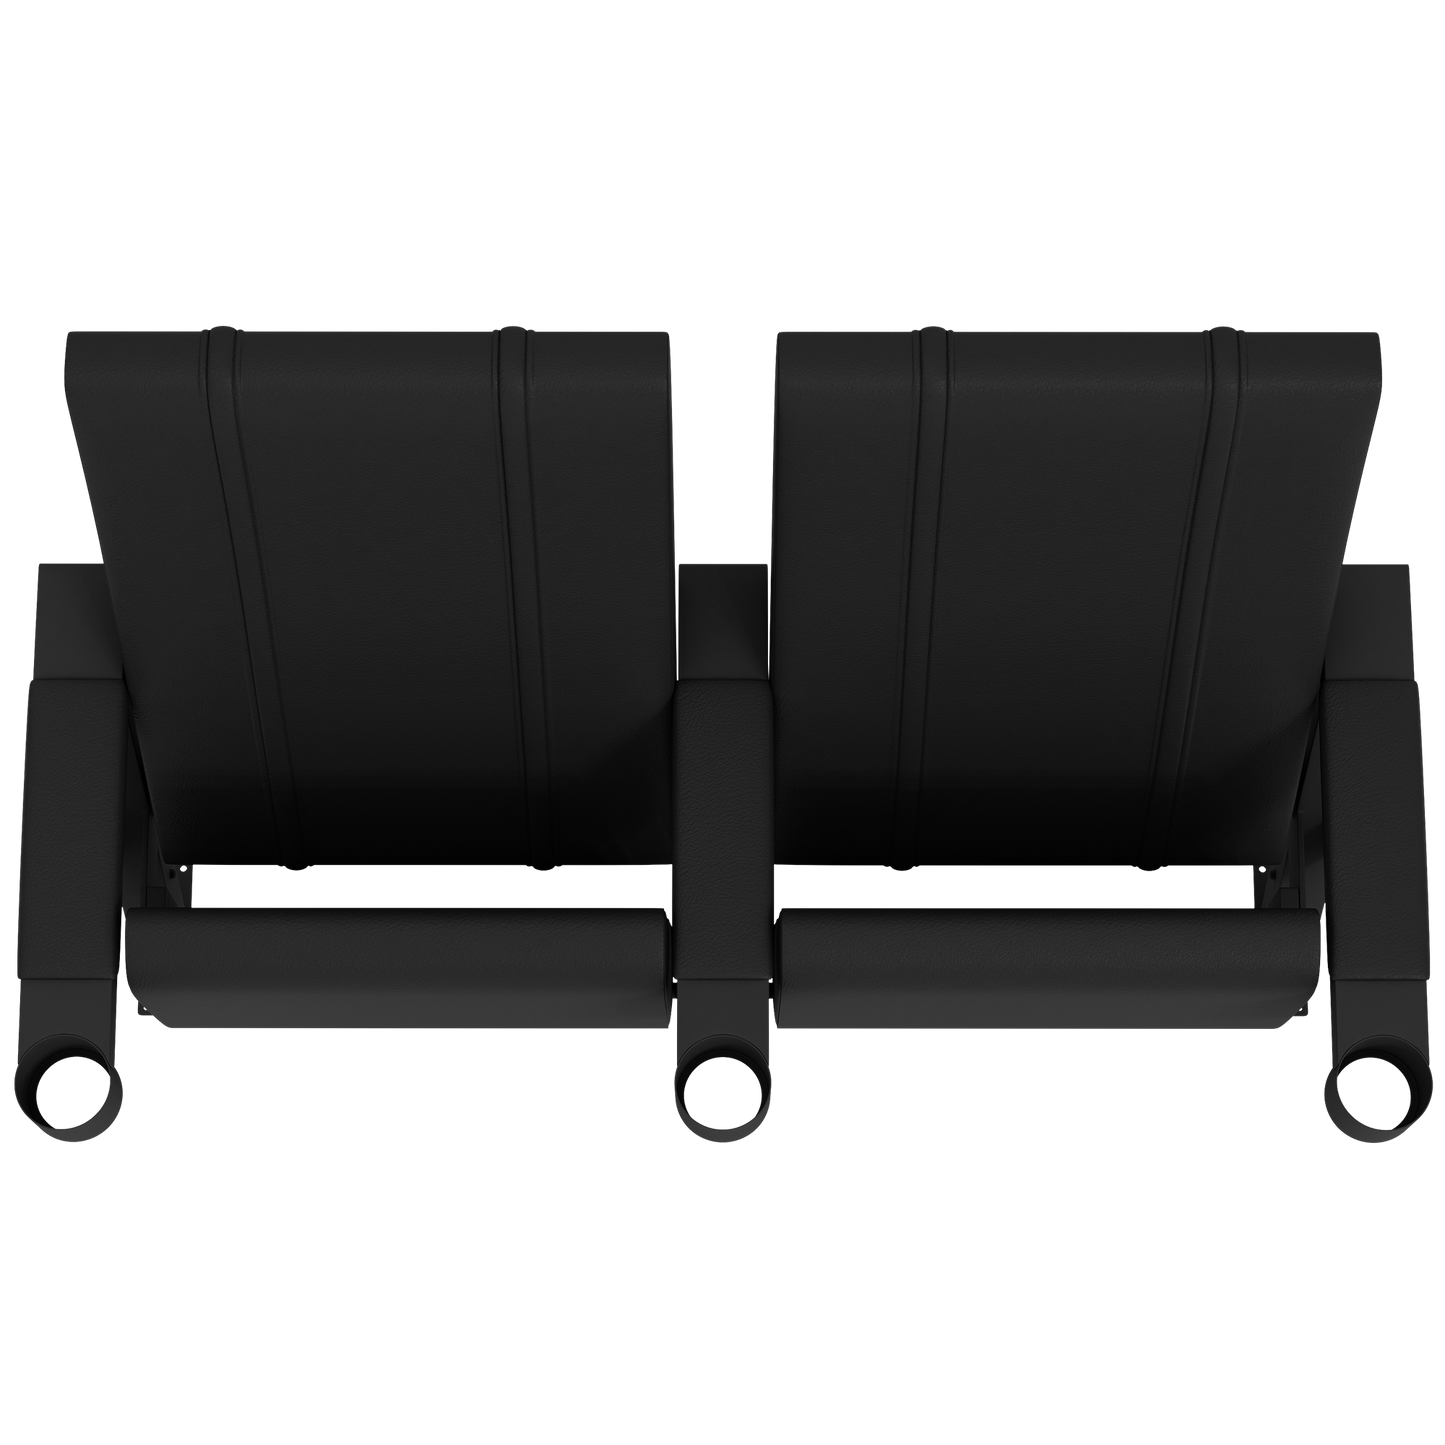 SuiteMax 3.5 VIP Seats with Western Michigan Broncos Logo